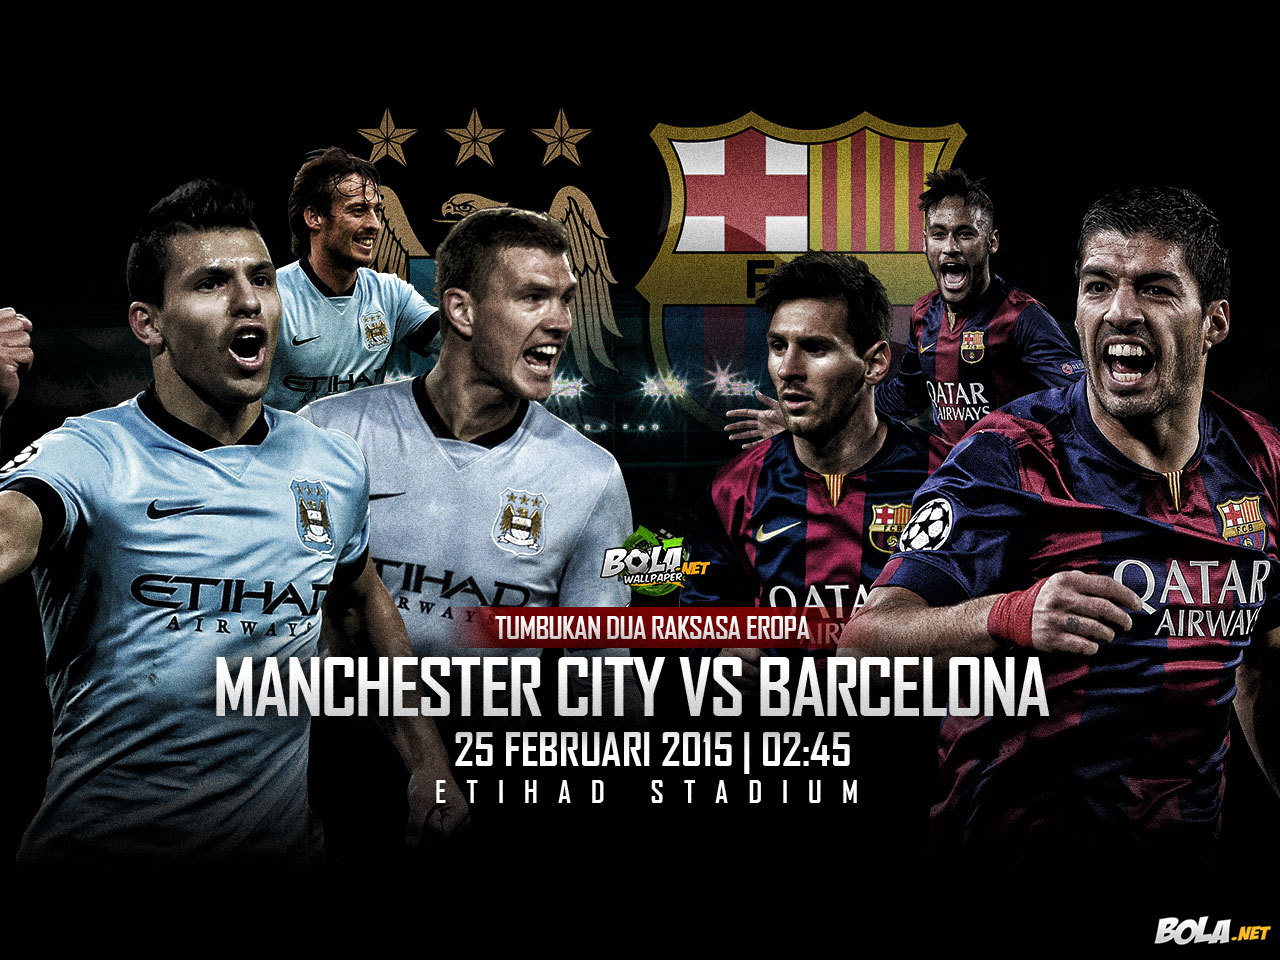 Download Wallpaper - Manchester City vs Barcelona - Bola.net